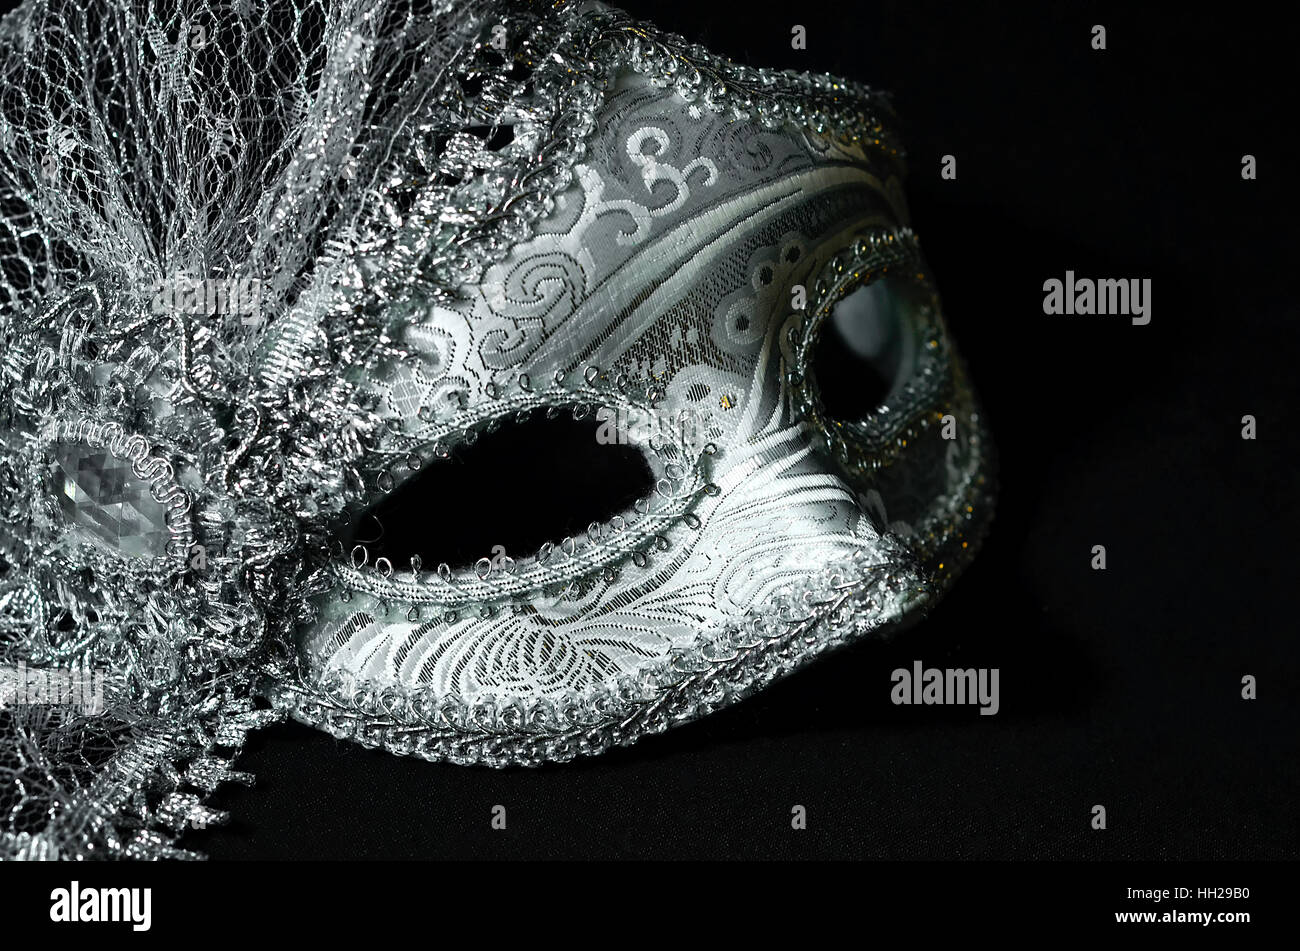 Masquerade -Fotos und -Bildmaterial in hoher Auflösung – Alamy